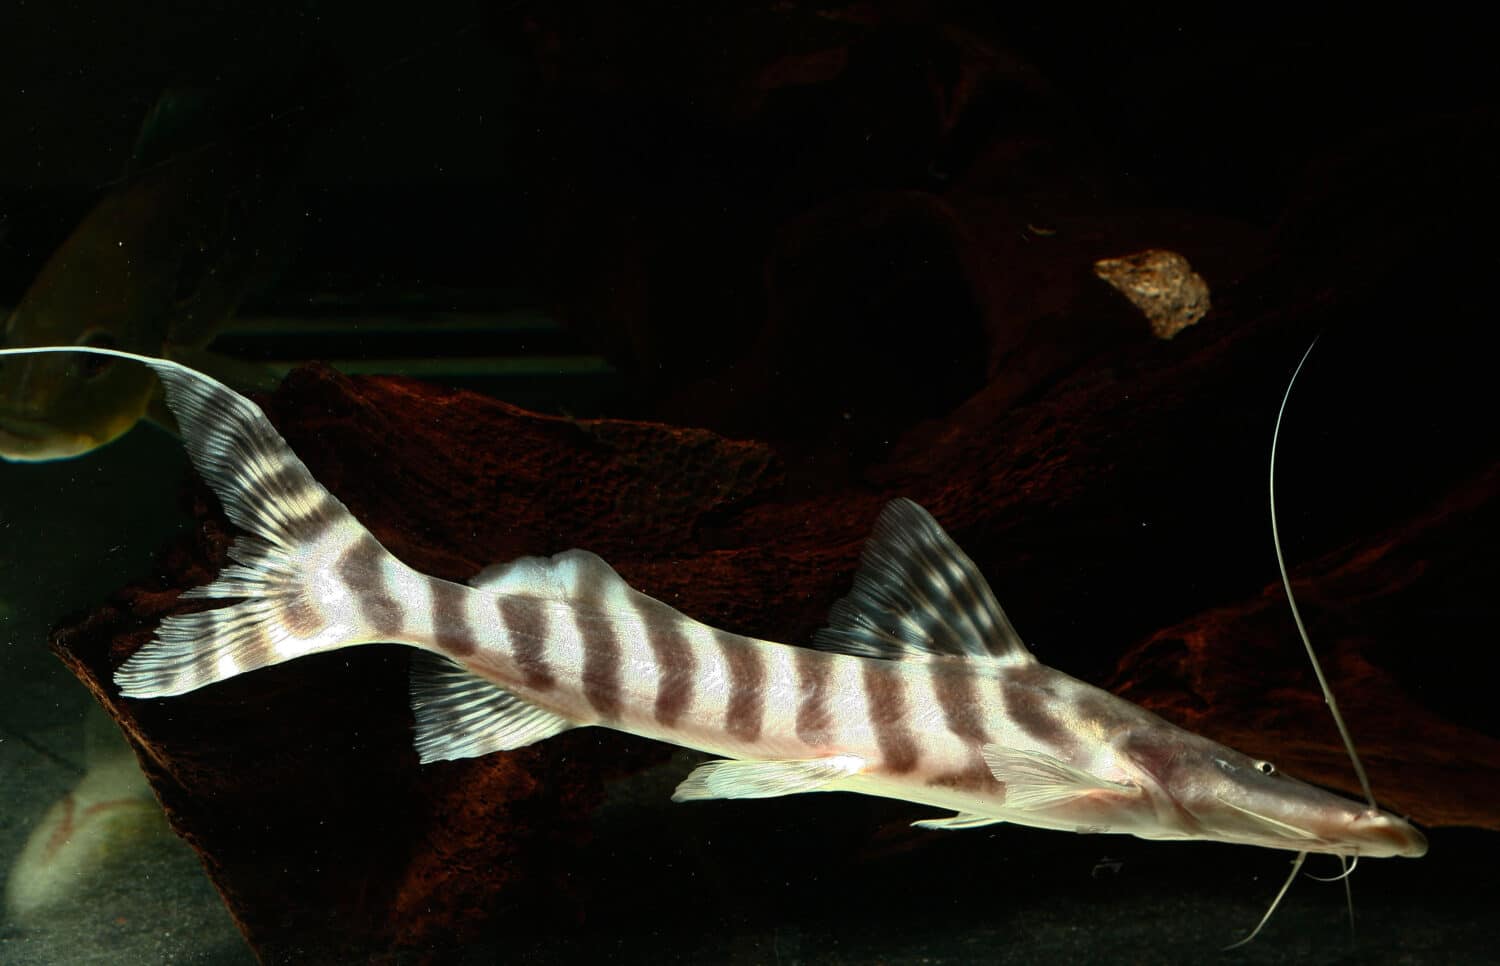 Large predatory Zebra shovelnose catfish (Brachyplatystoma tigrinum) in aquarium